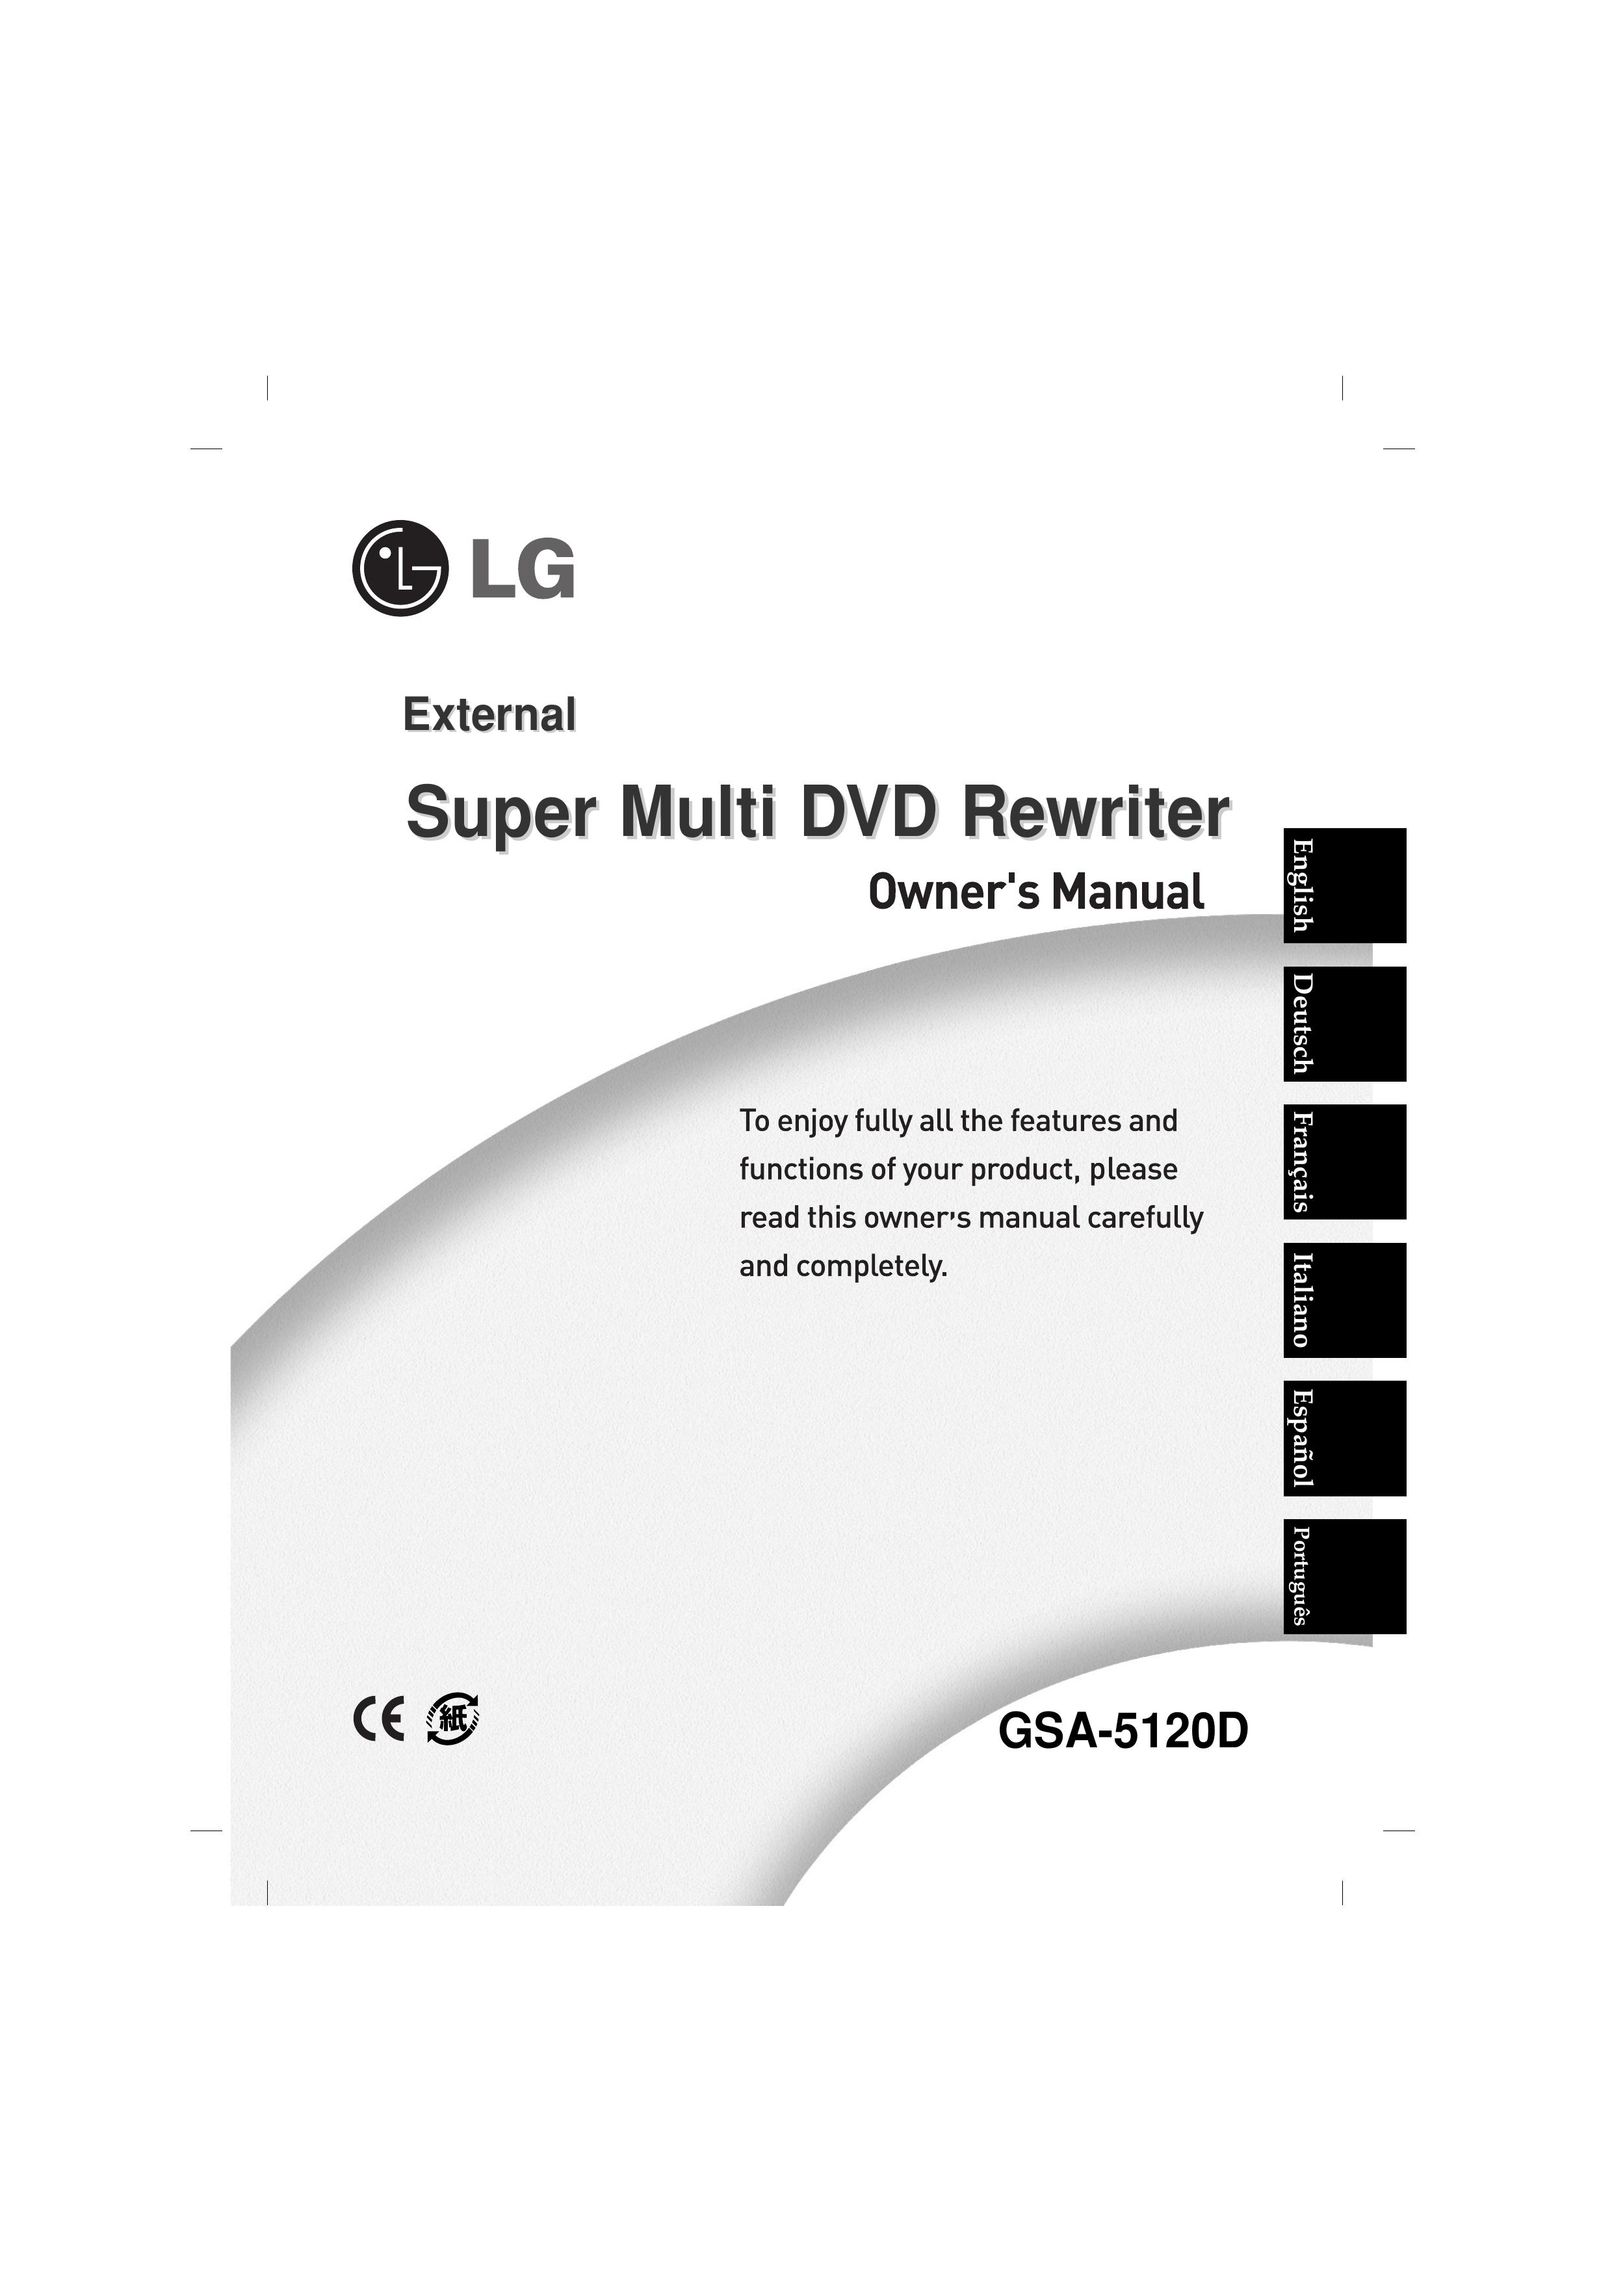 Kodak GSA-5120D DVD Recorder User Manual